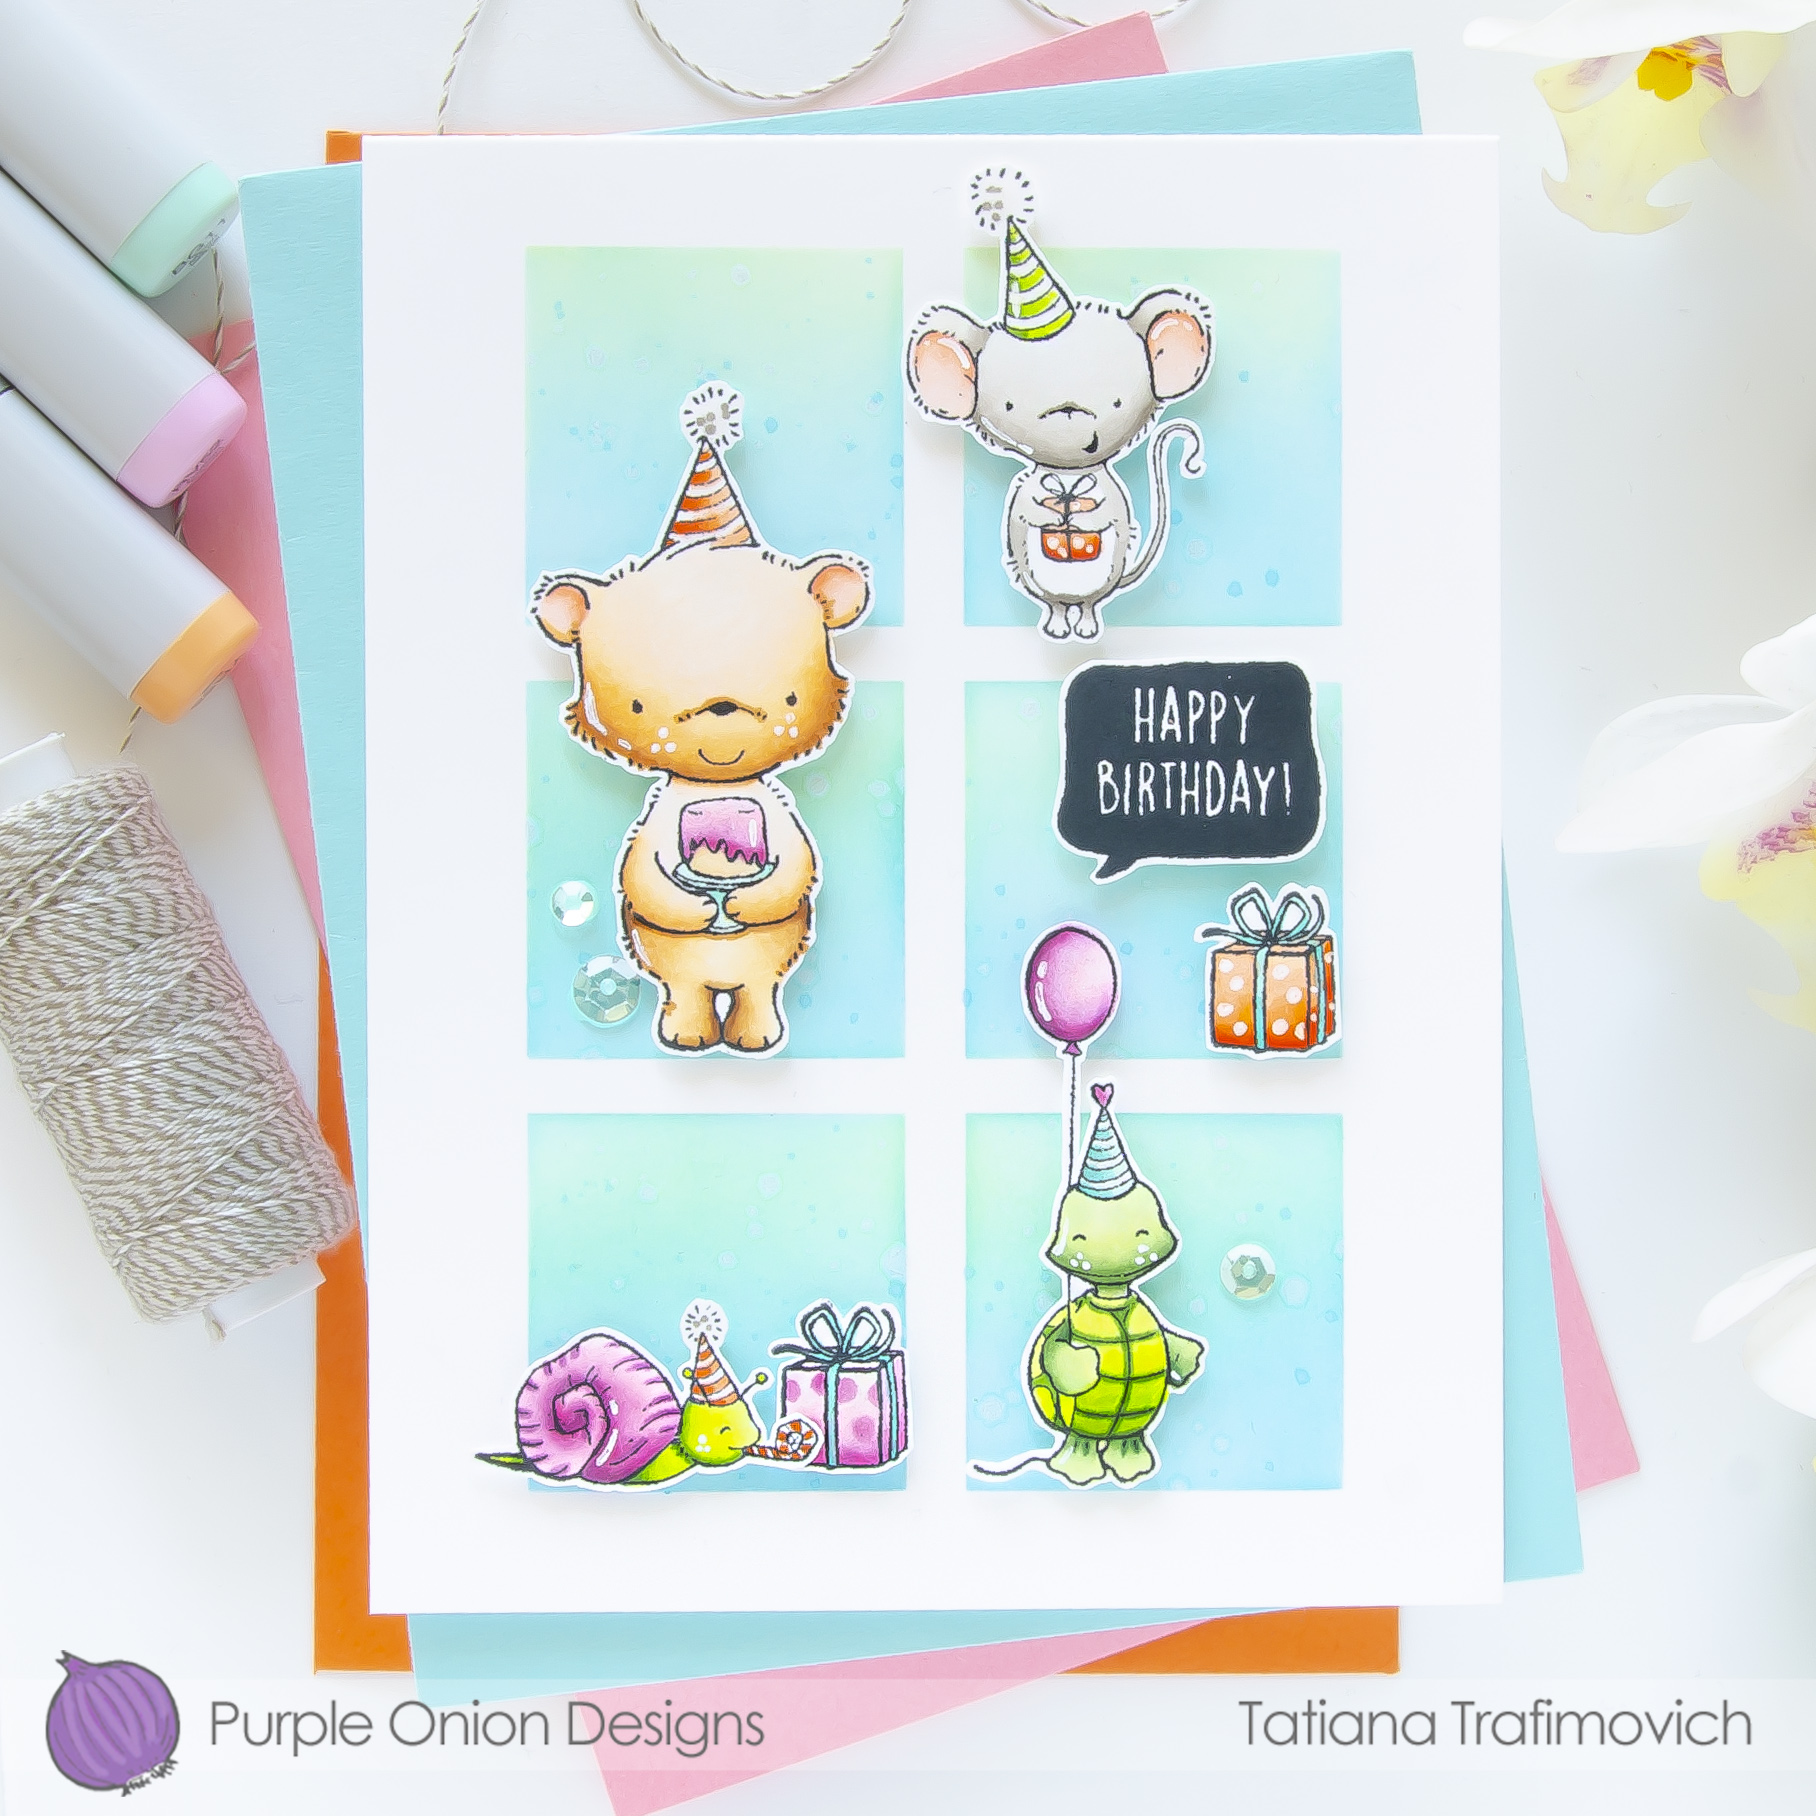 Happy Birthday! #handmade card by Tatiana Trafimovich #tatianacraftandart - stamps by Purple Onion Designs